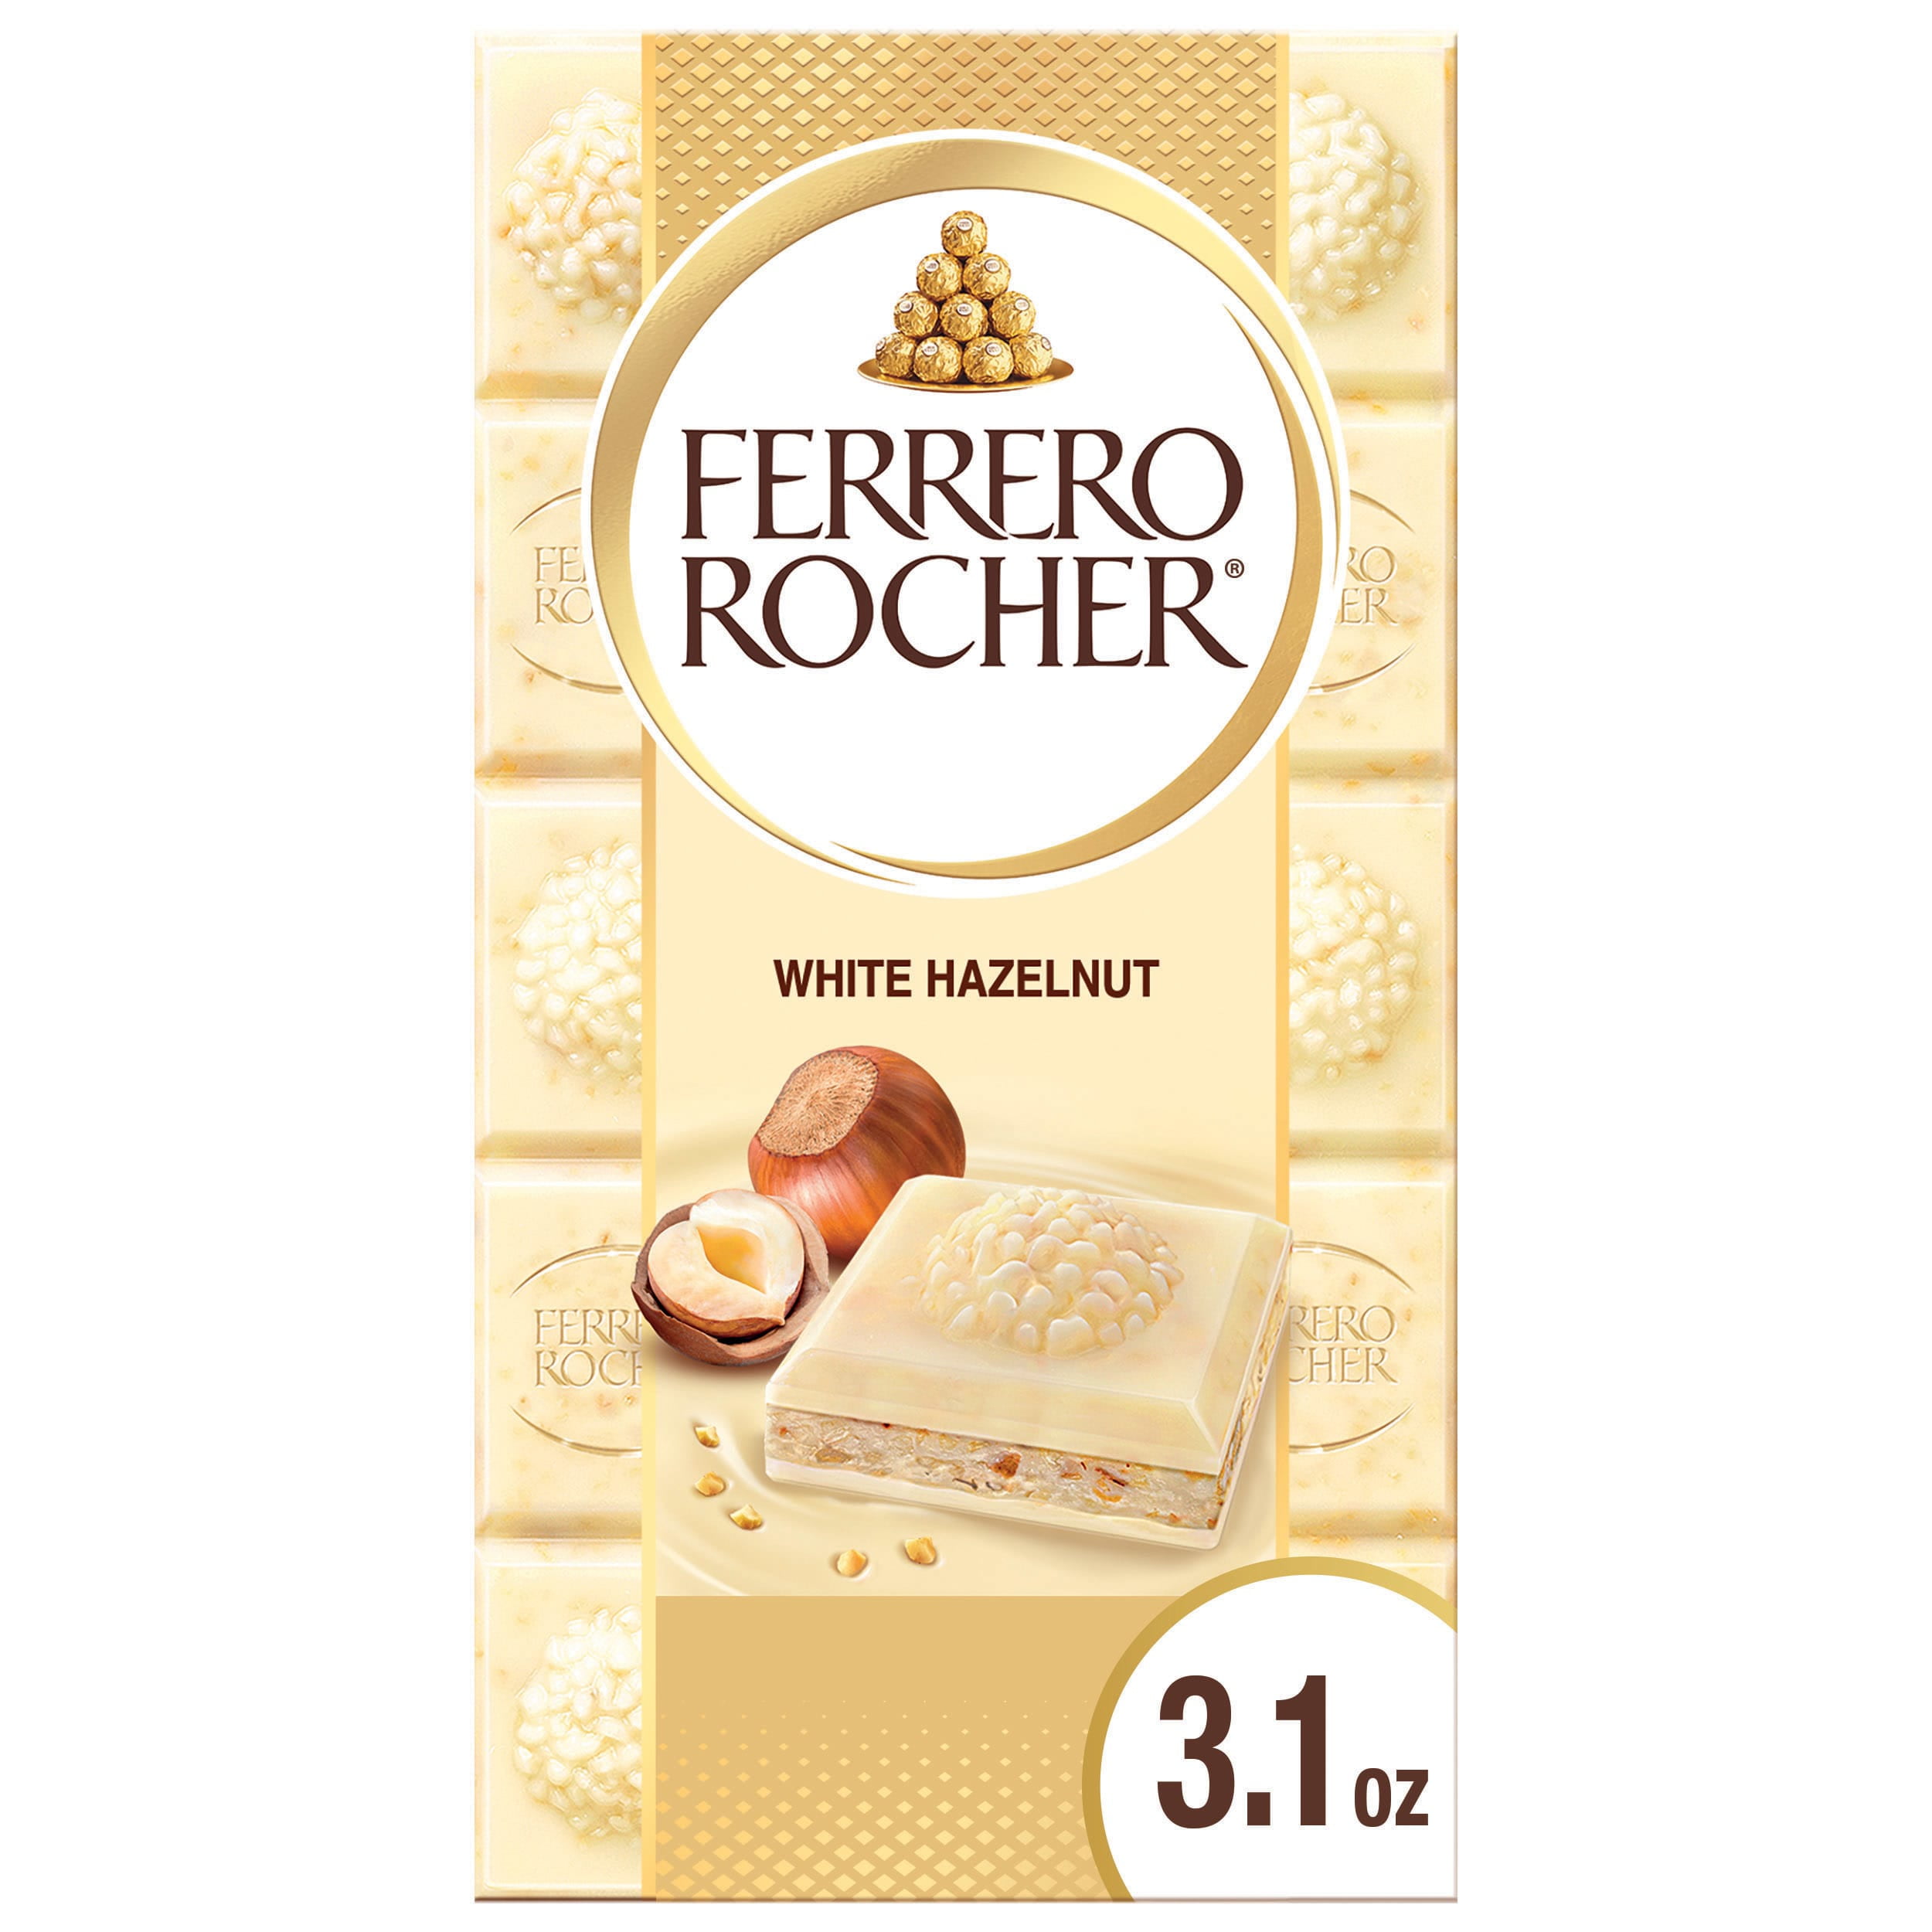 Ferrero Rocher Premium Chocolate Bar, White Chocolate Hazelnut, A Great Easter Gift, 3.1 oz